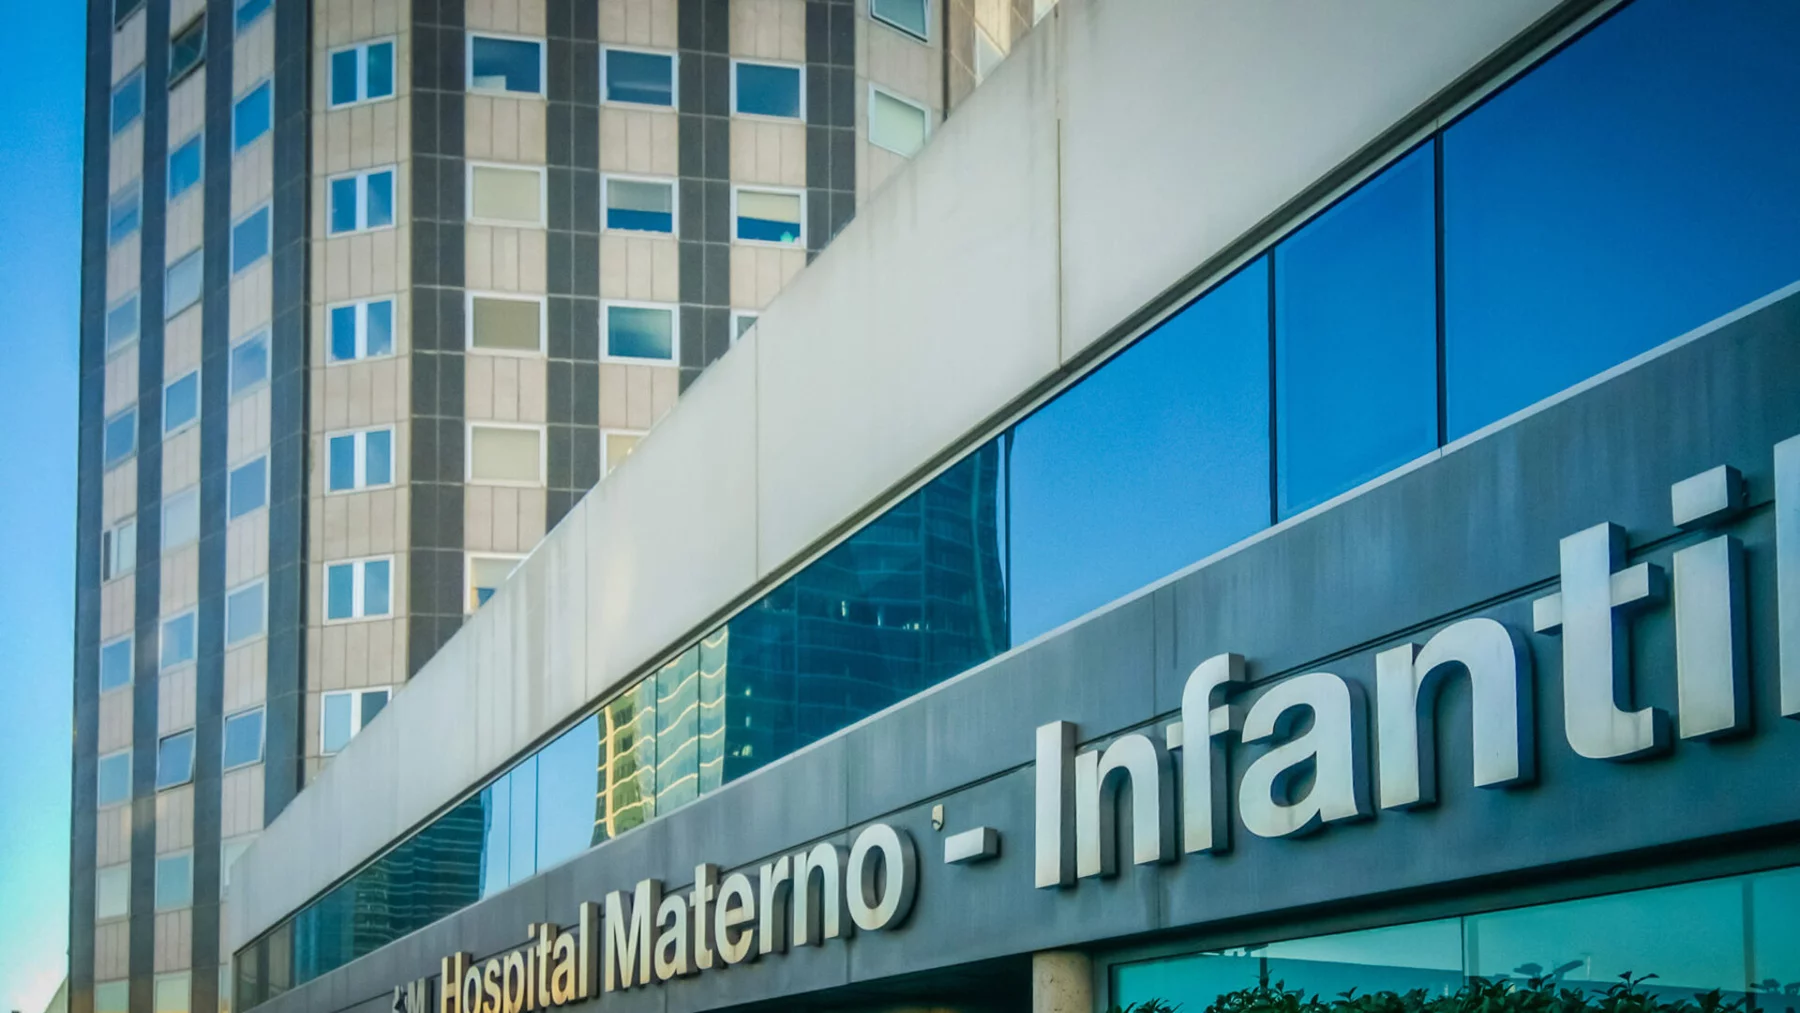 Hospital Universitario La Paz is the largest hospital in Madrid